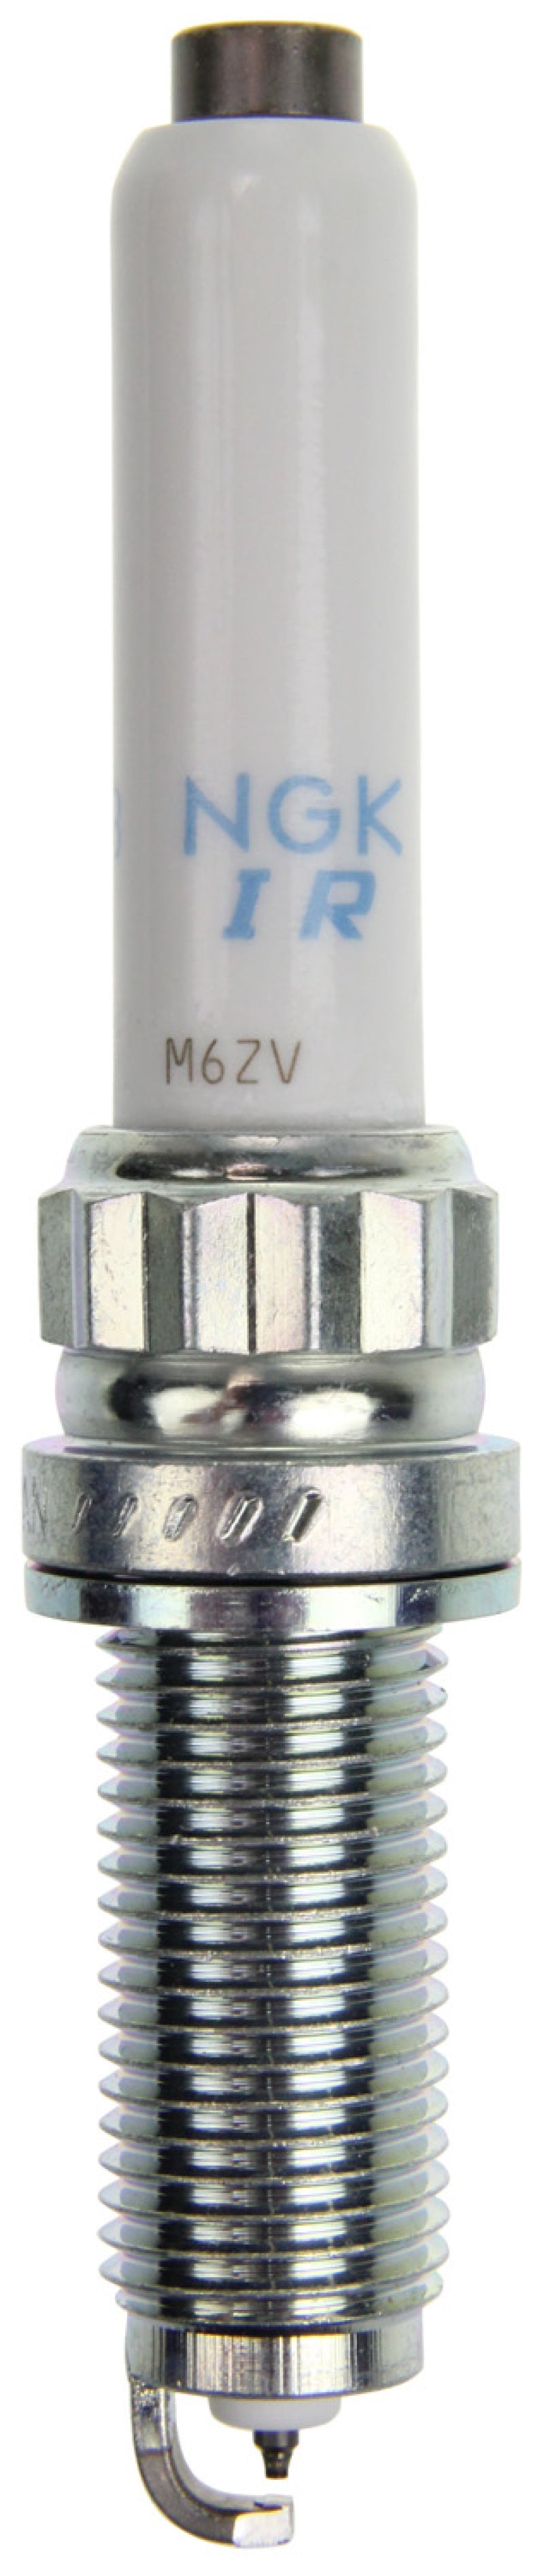 NGK Laser Iridium Spark Plug Box of 4 (SILZKGR8B8S)